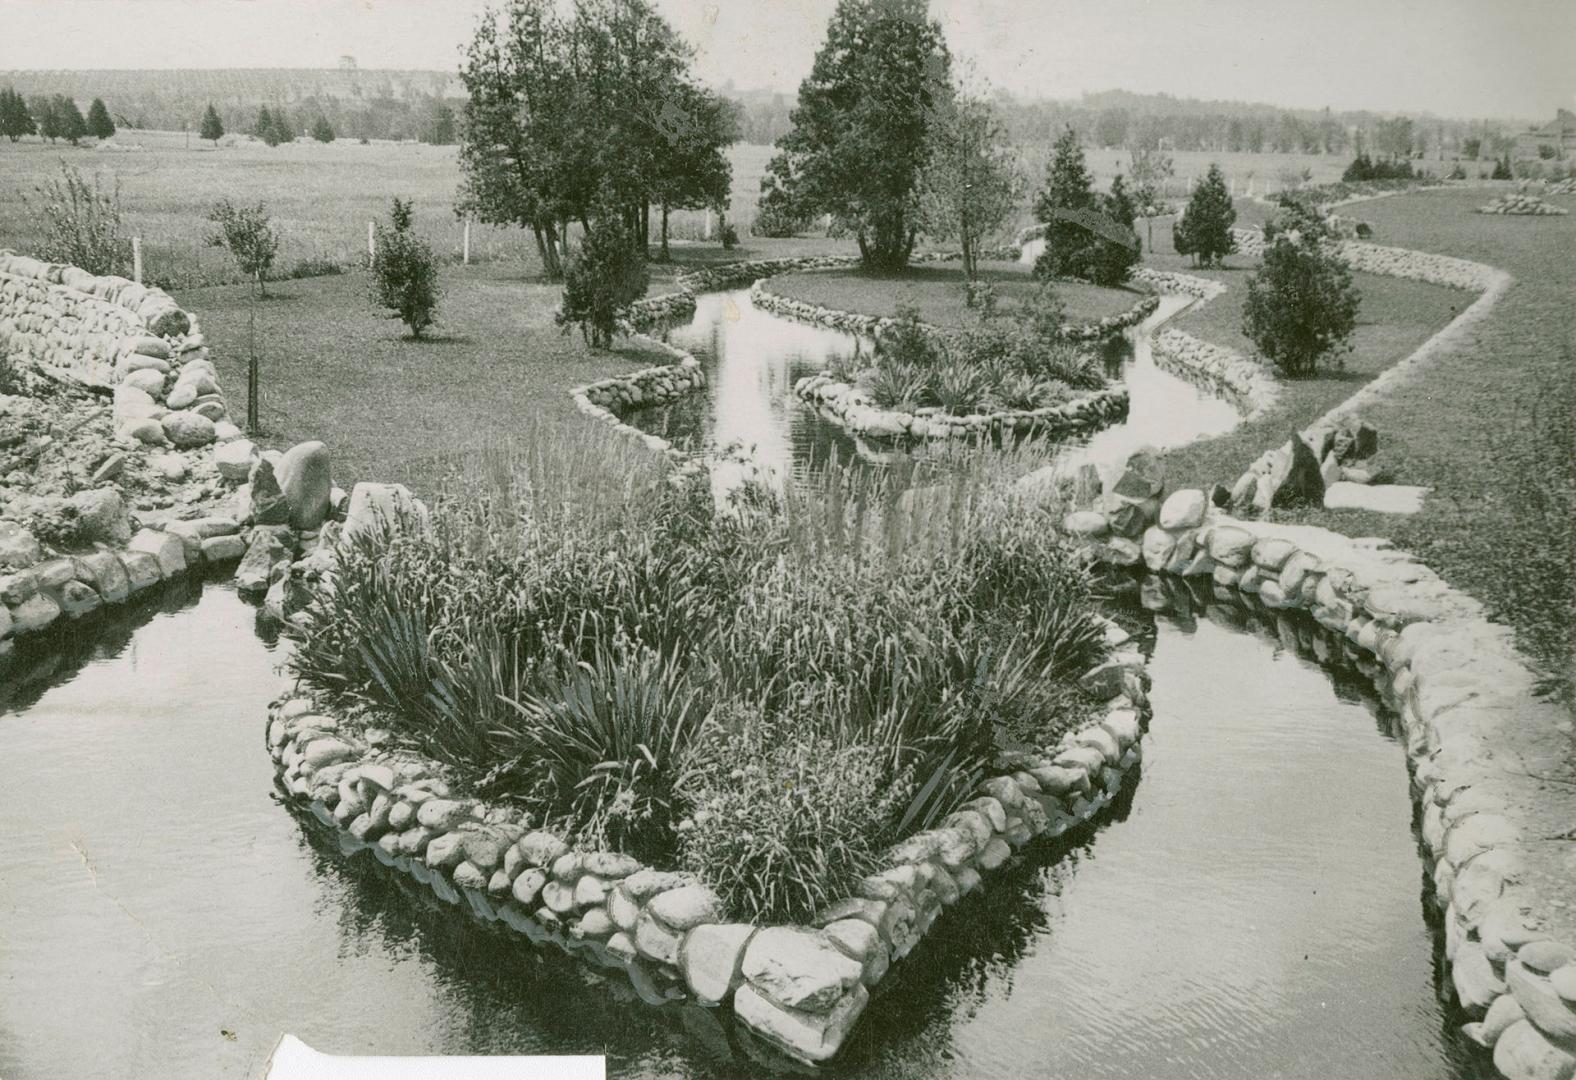 Garden made by Ontario Reformatory inmates